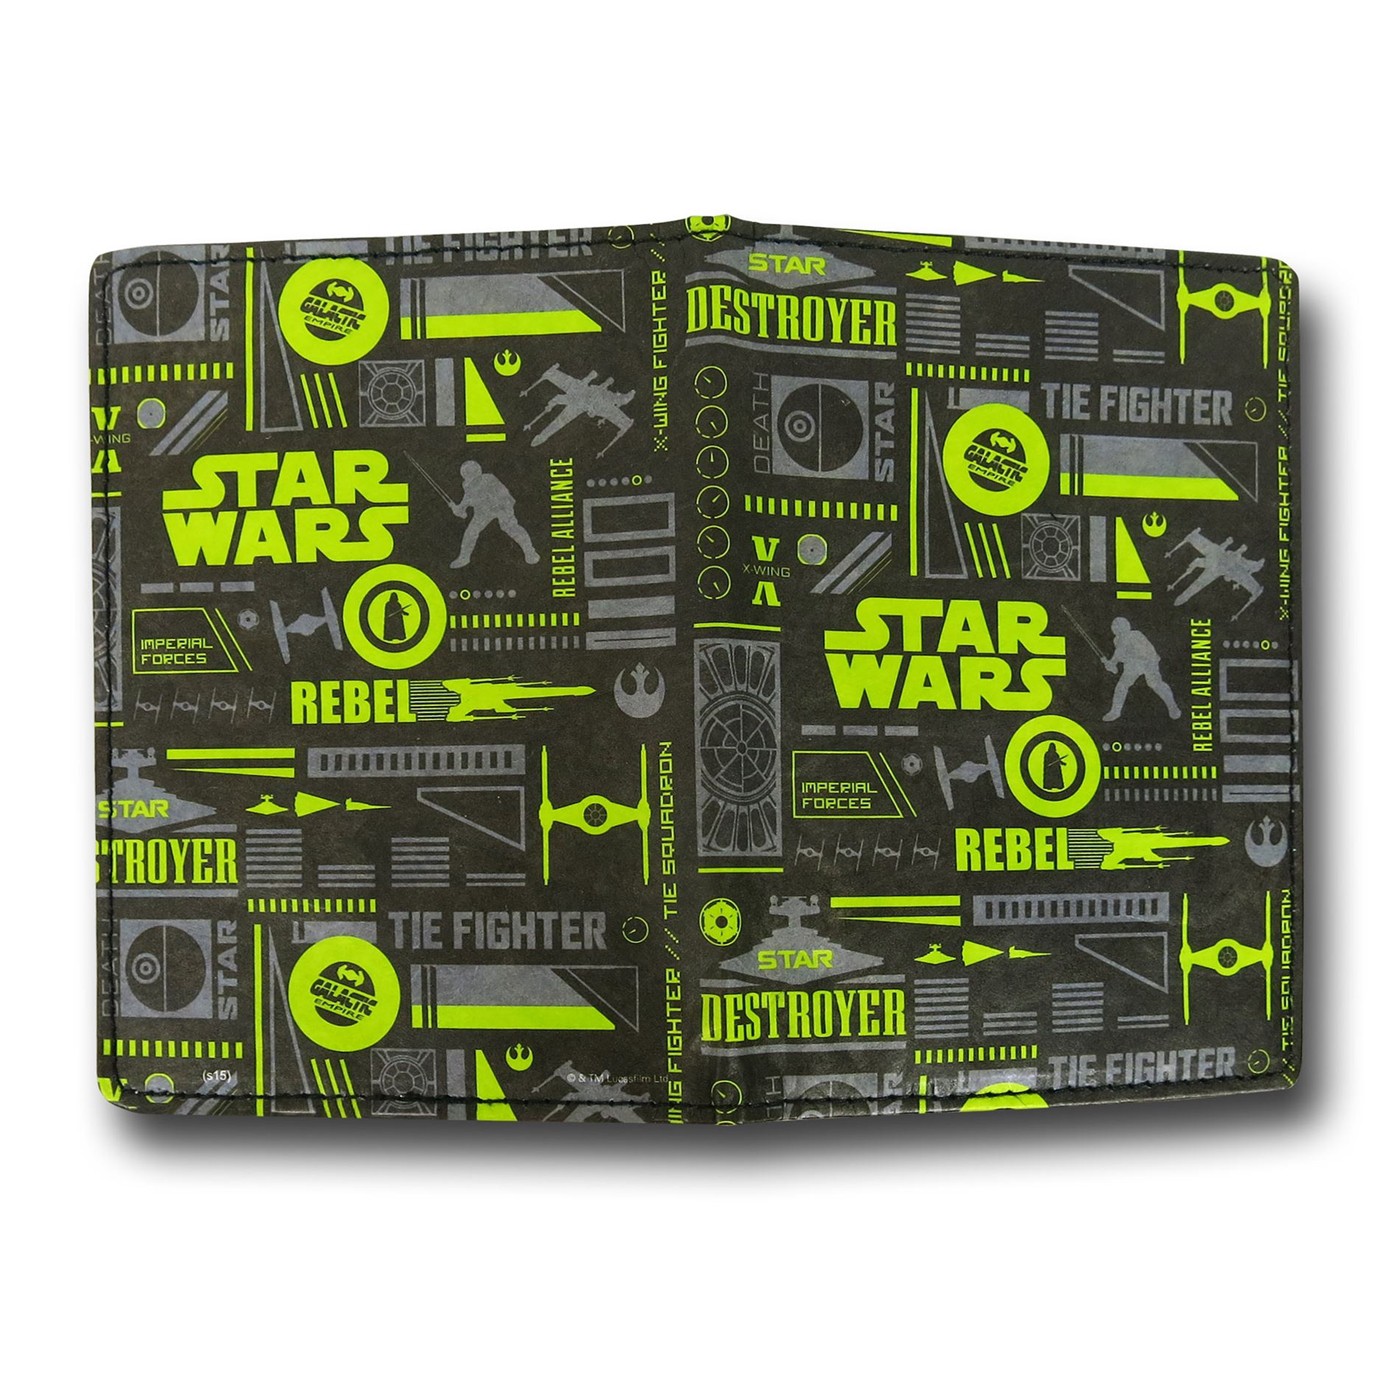 Star Wars Tyvek Mighty Passport Cover